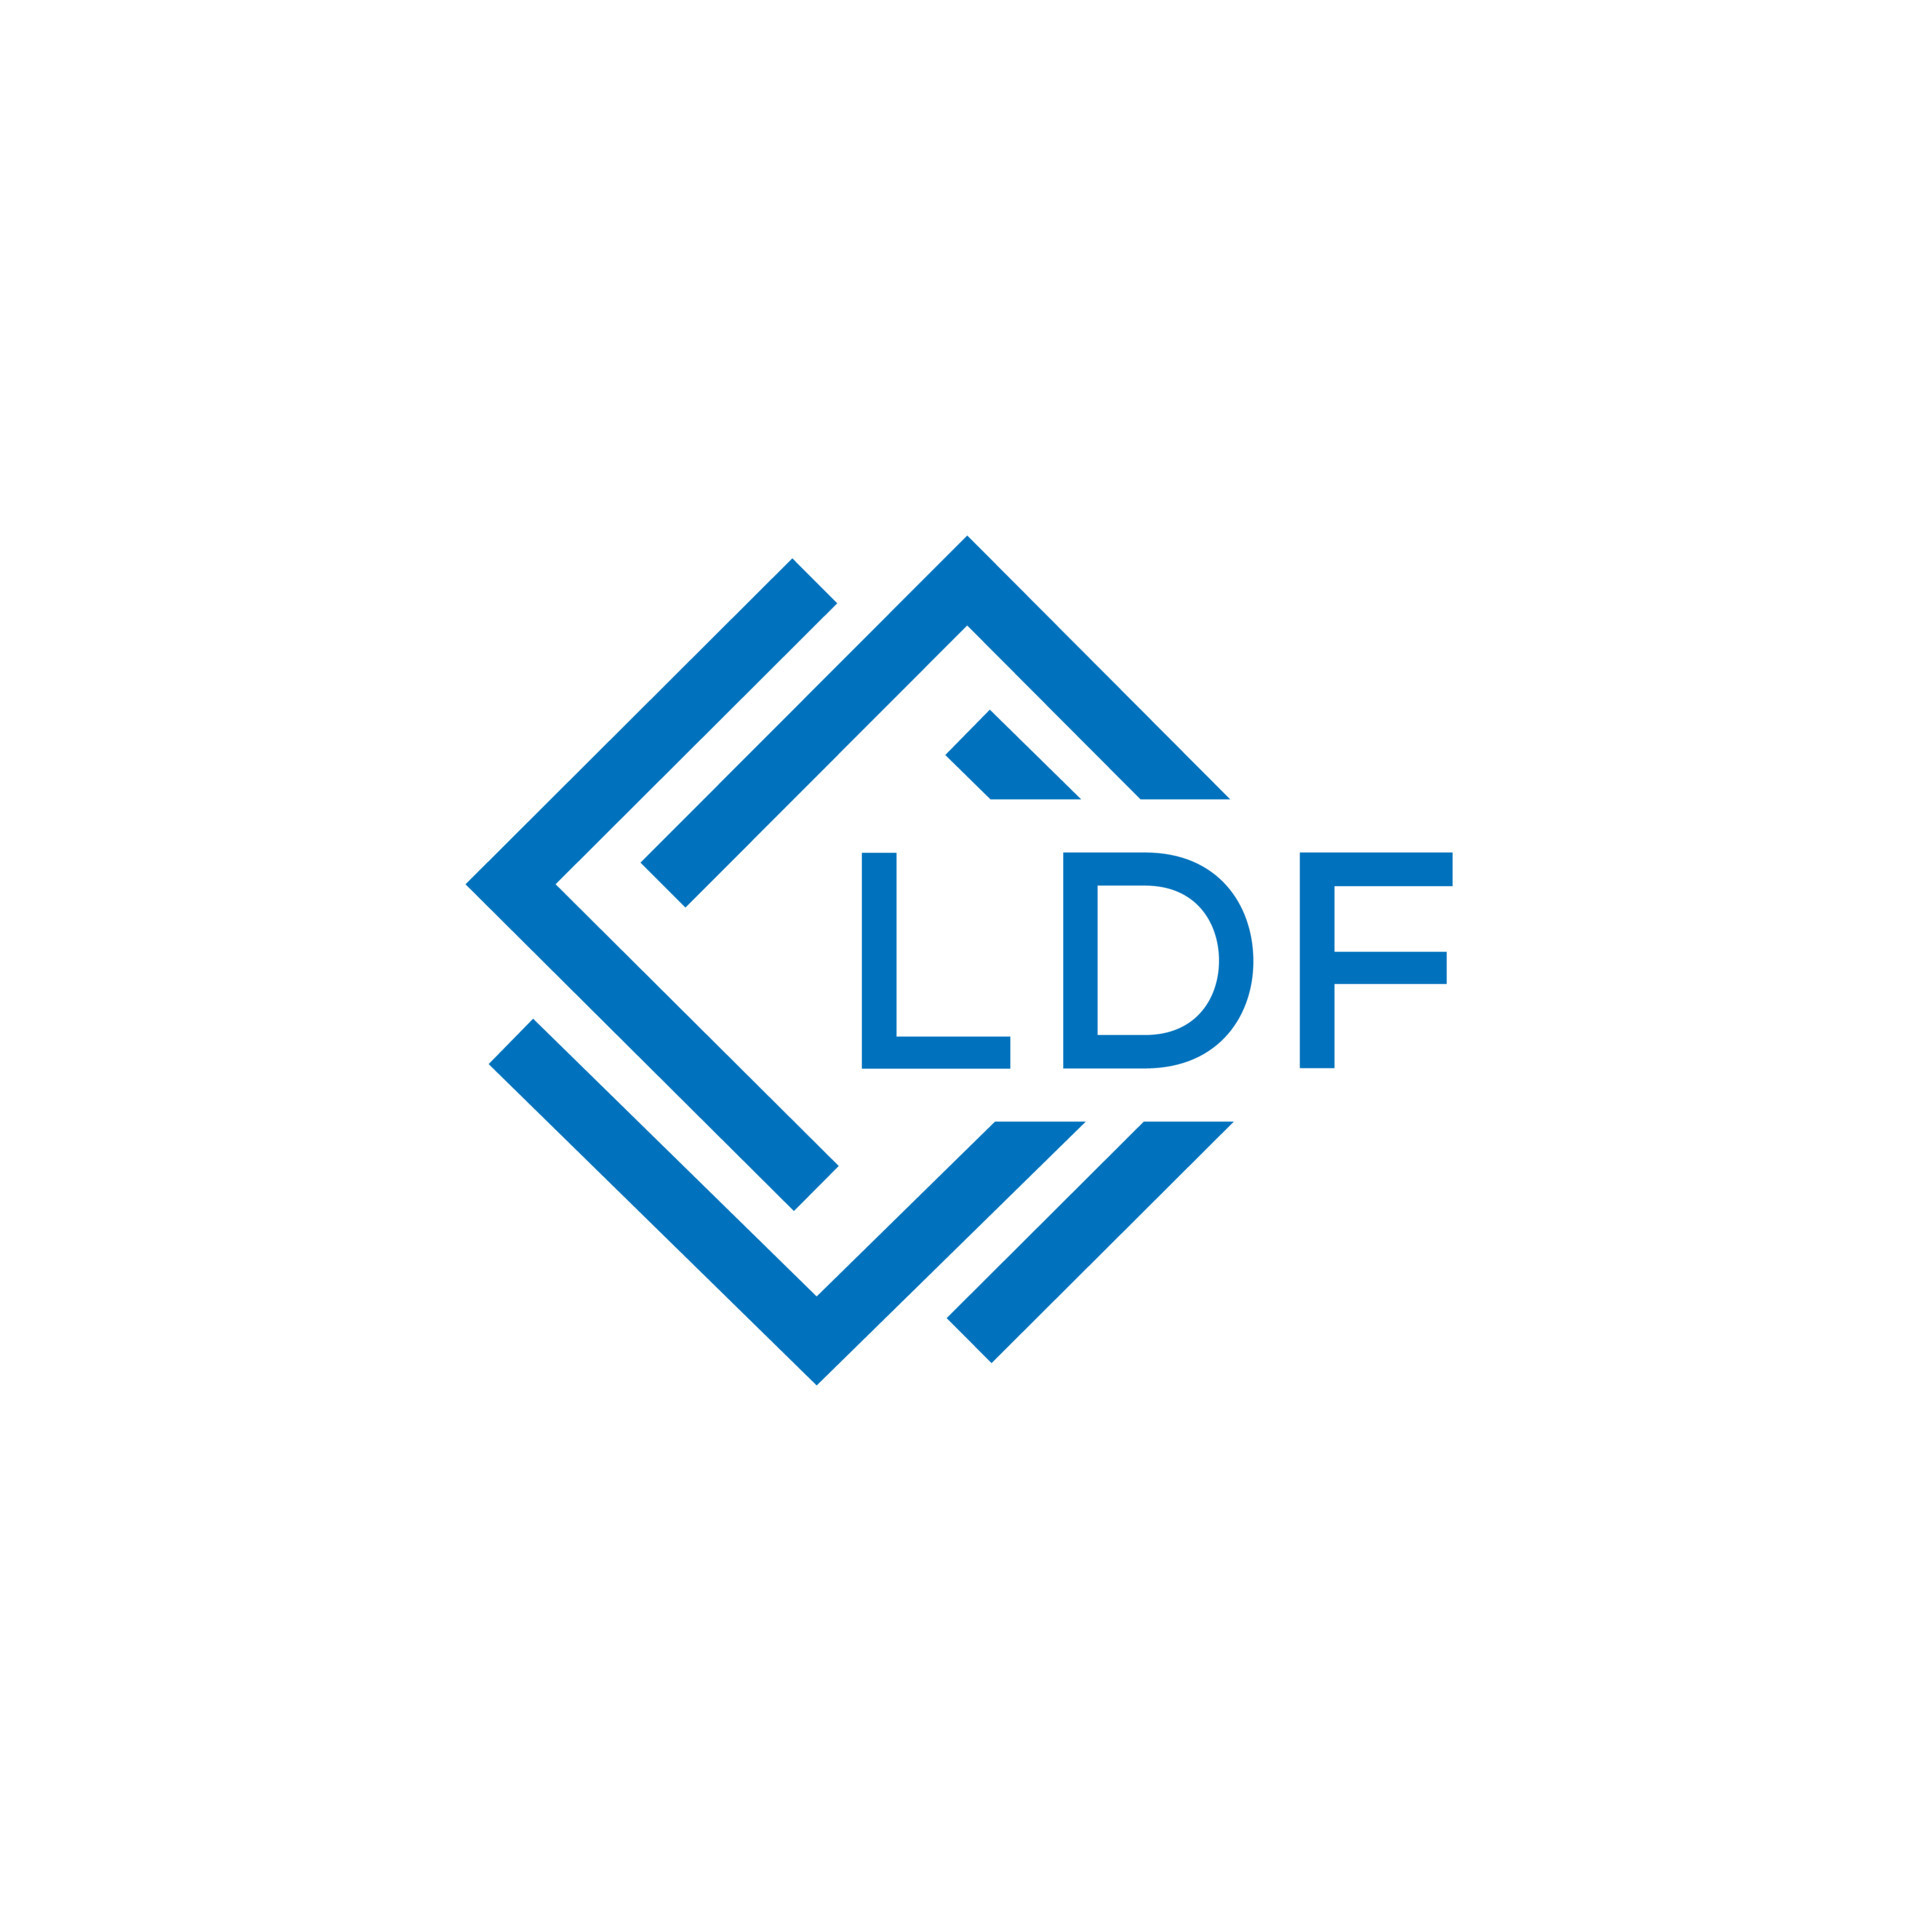 LDF letter logo design on white background. LDF creative circle